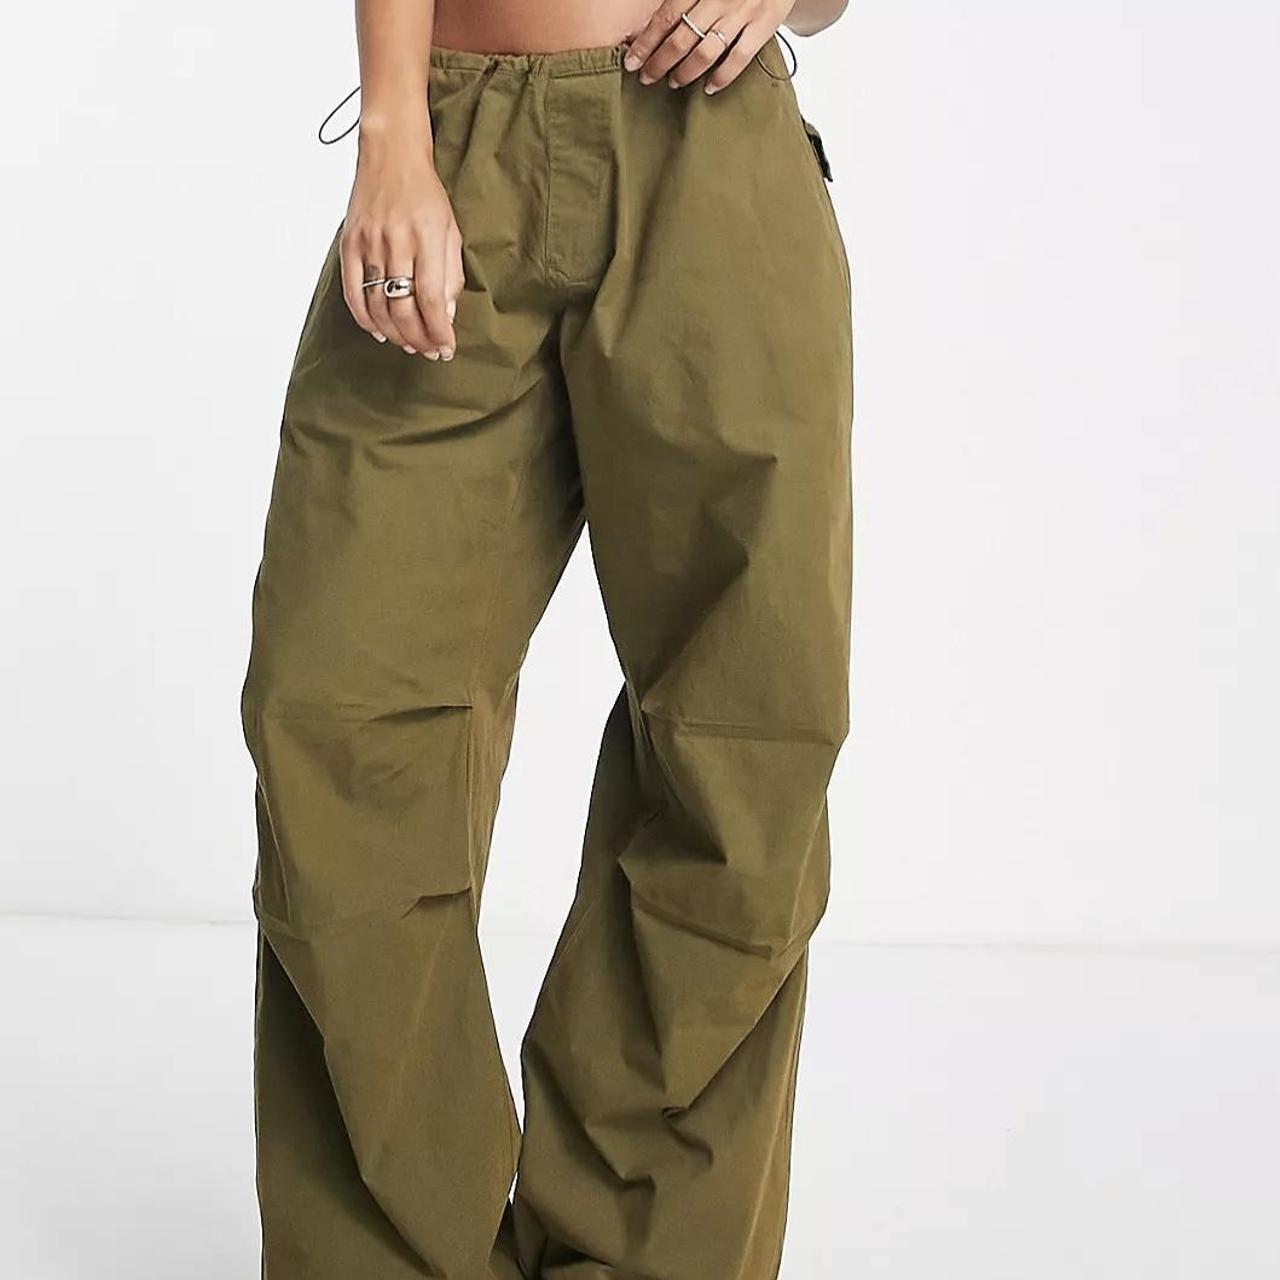 Pull&Bear Women's Khaki and Green Trousers | Depop